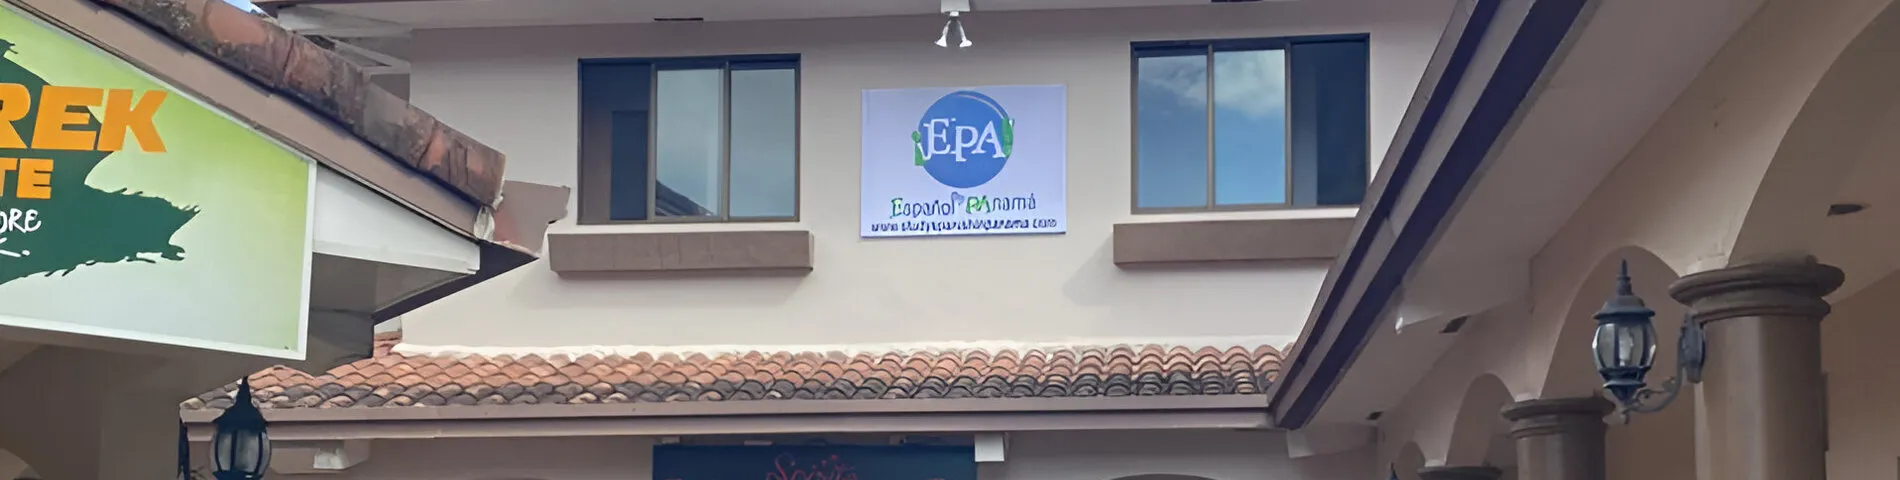 EPA! Español en Panamá afbeelding 1